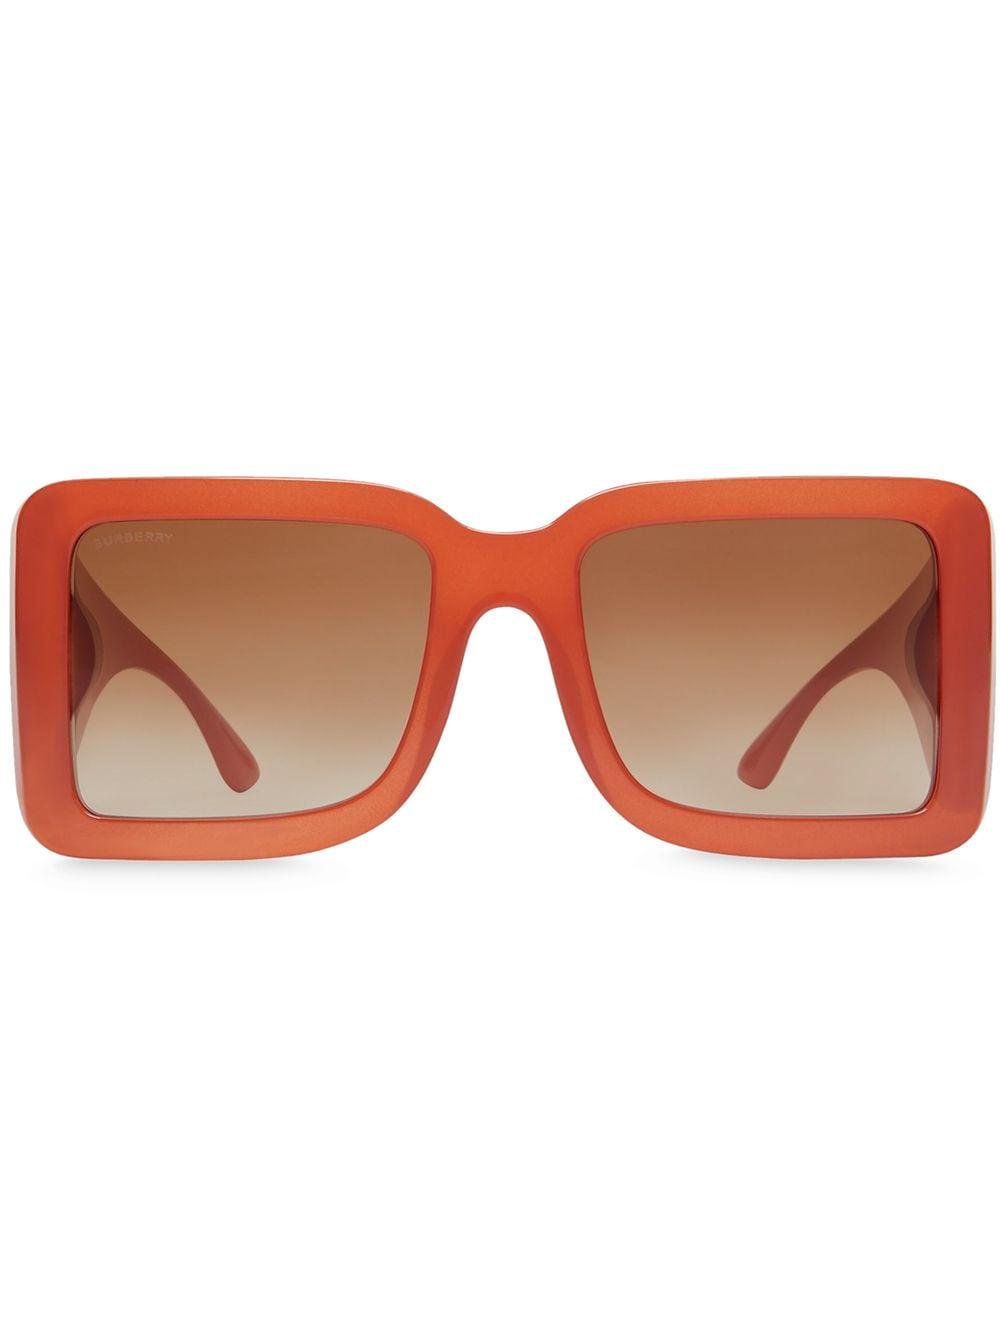 Burberry B Motif Square Frame Sunglasses in Orange | Lyst